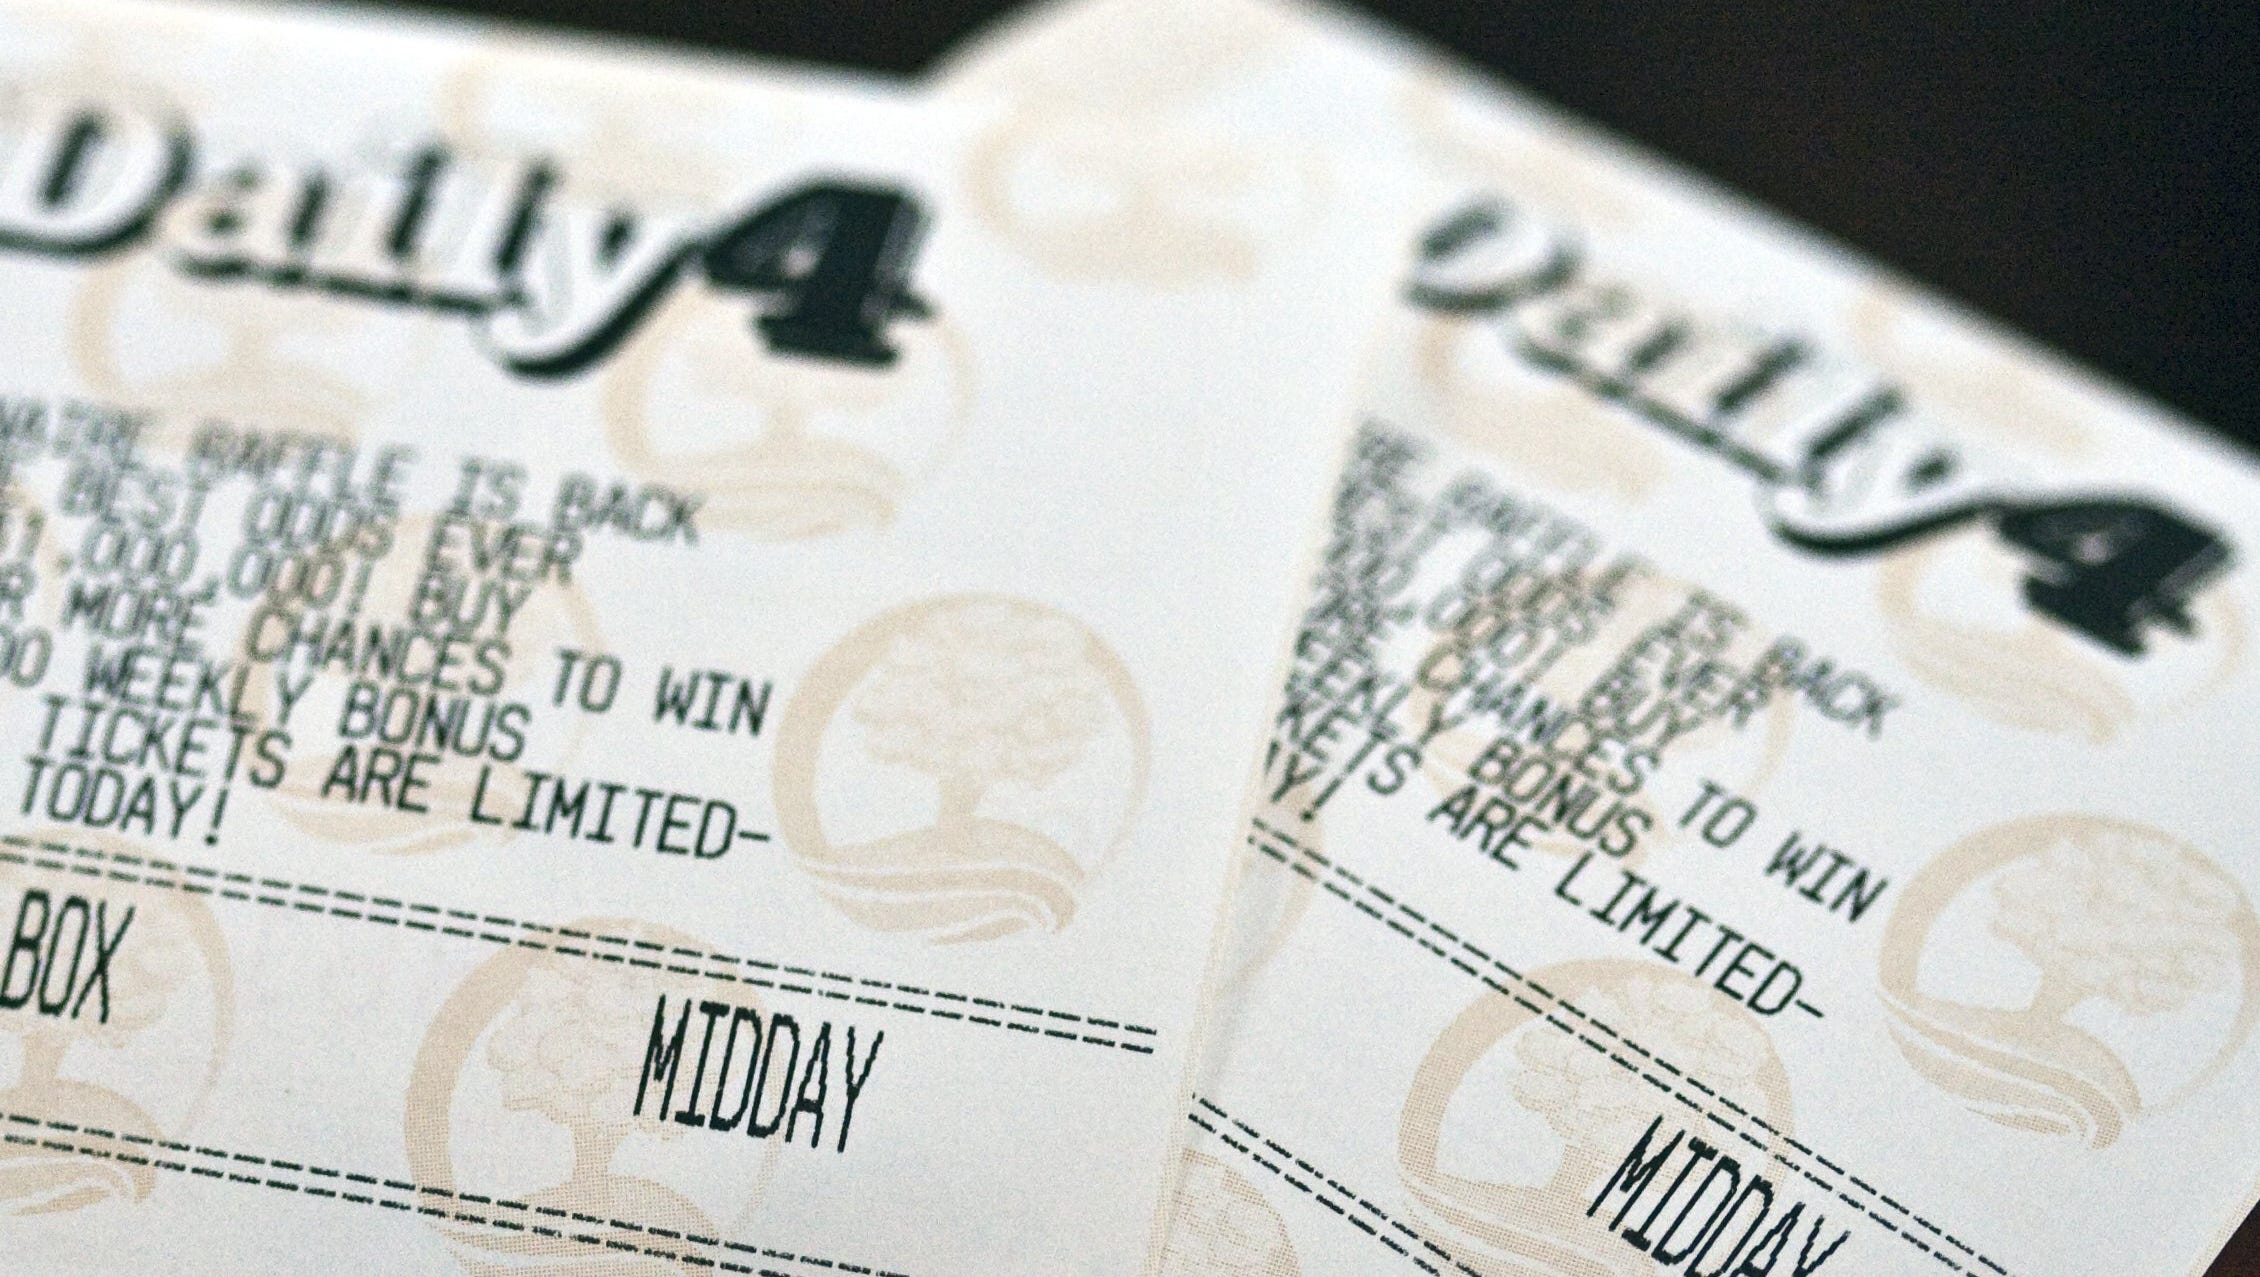 past winning michigan lottery numbers